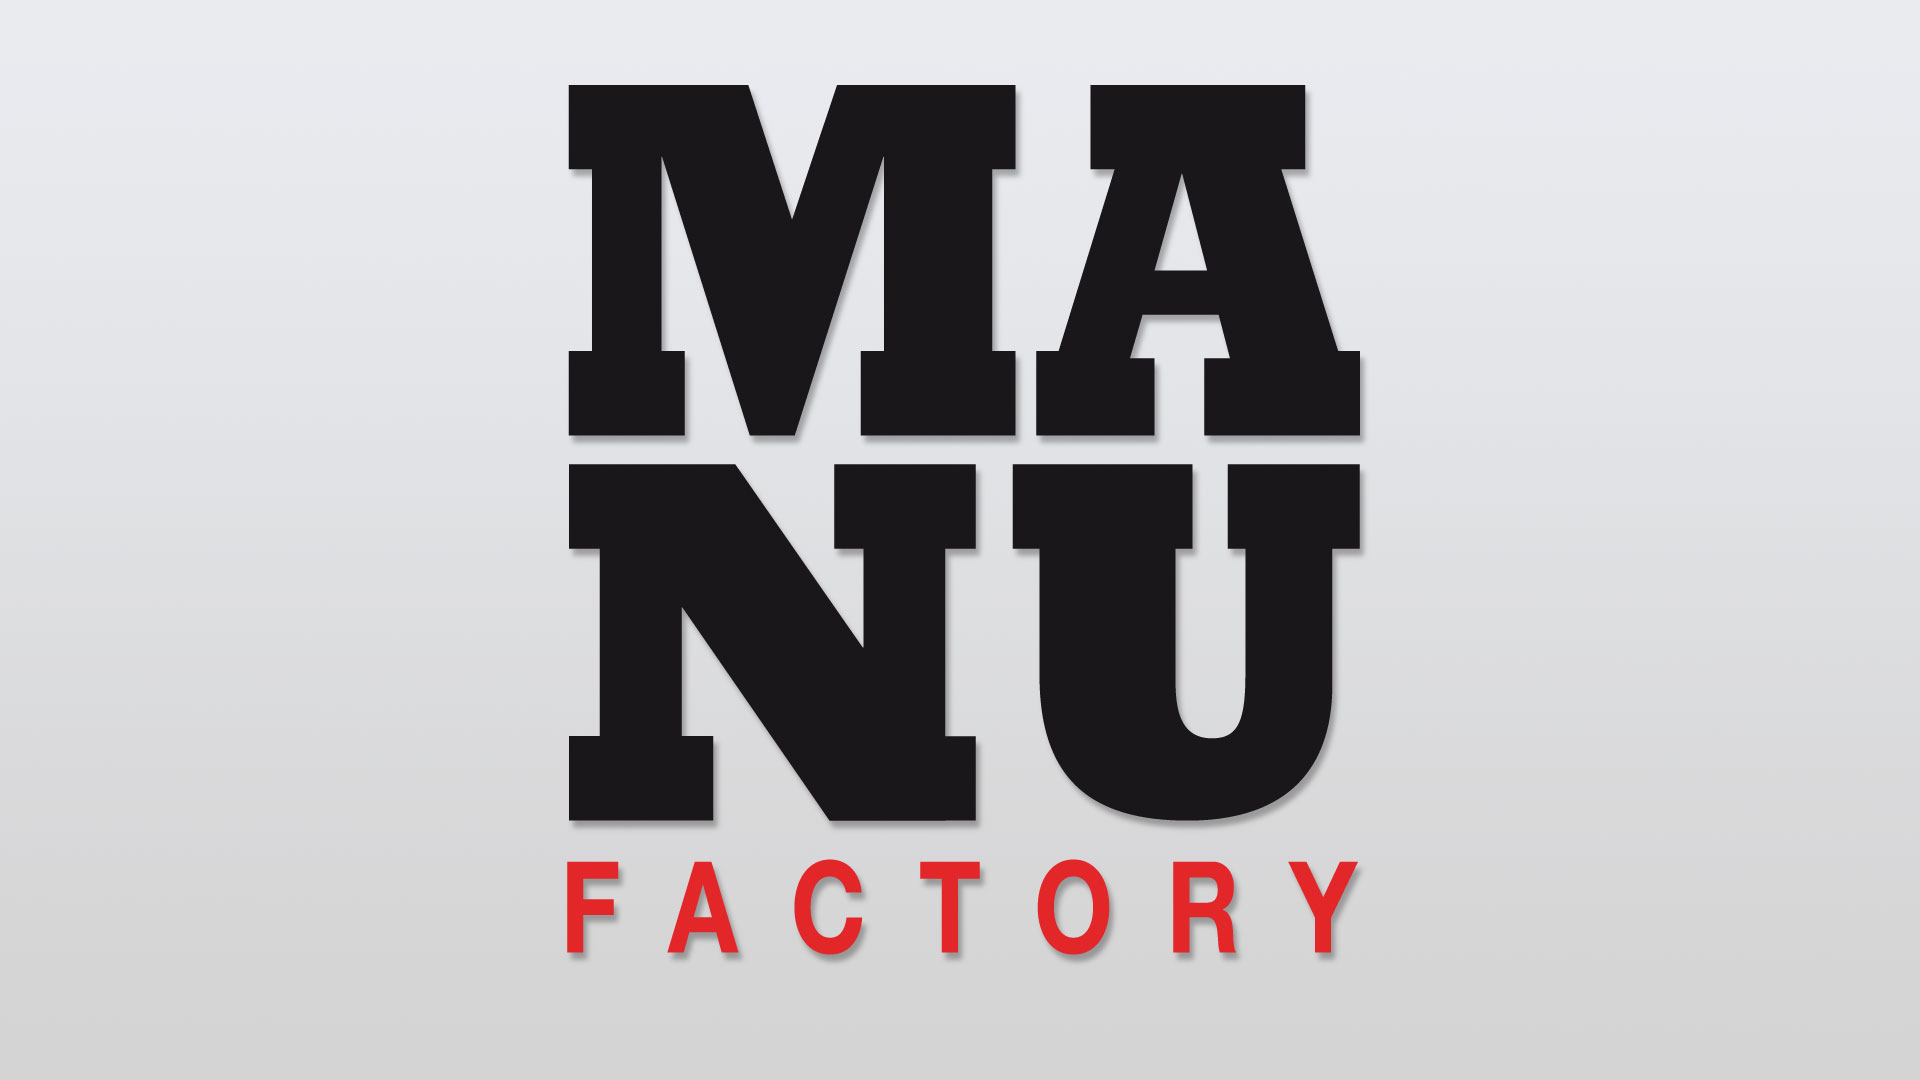 Manufactory